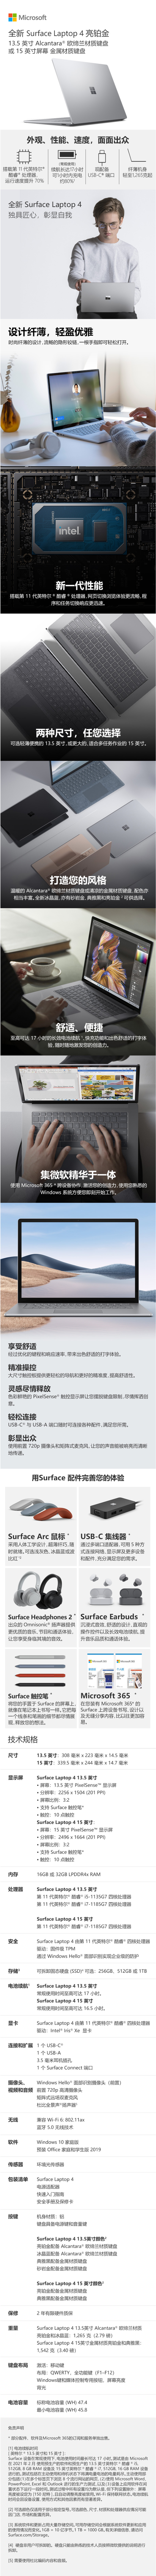 FireShot Capture 054 - 【微软Surface Laptop 4】微软Surface Laptop 4 11代酷睿i5-1135G7 8G+512G 锐炬Xe显卡 _ - item.jd.com.png